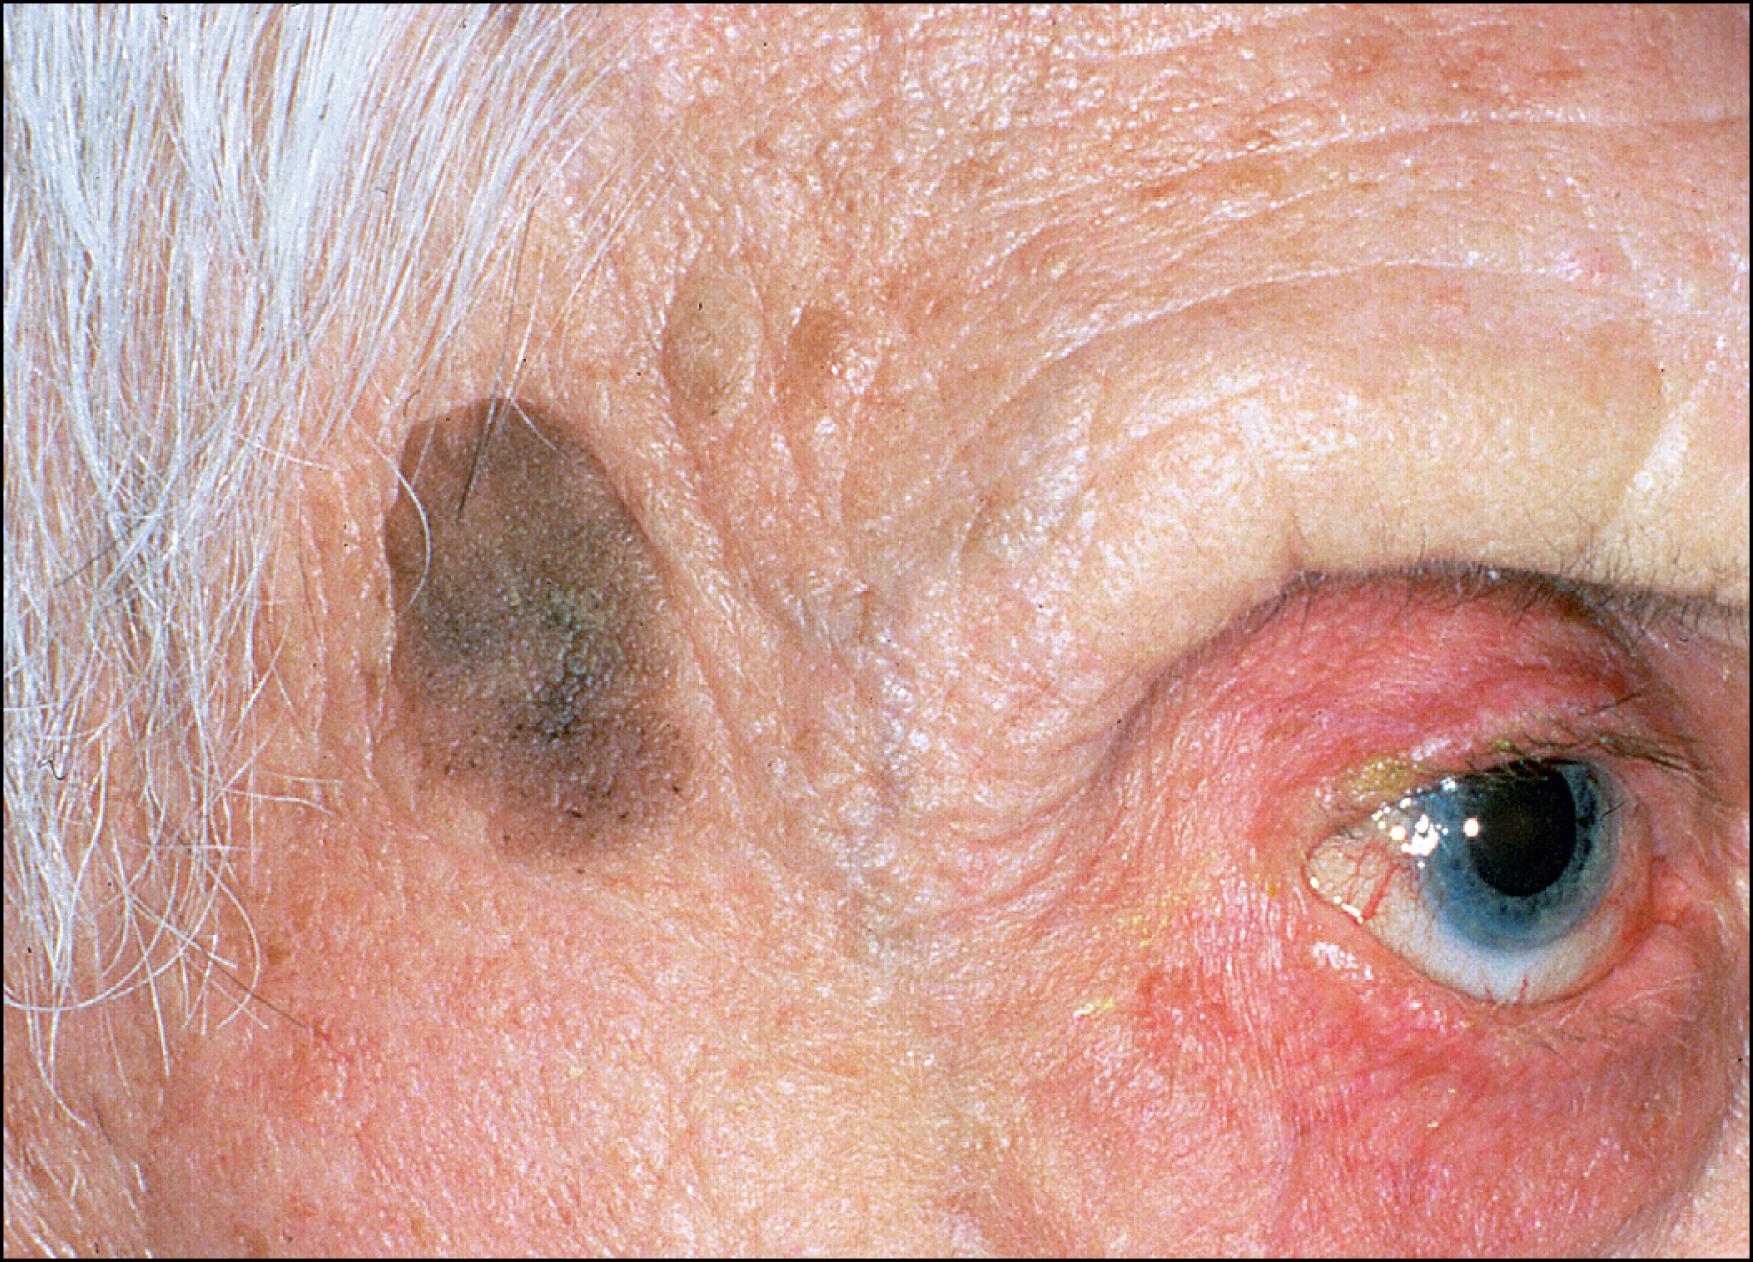 Fig. 27.3, Seborrheic keratosis of the temporal region of an elderly patient.